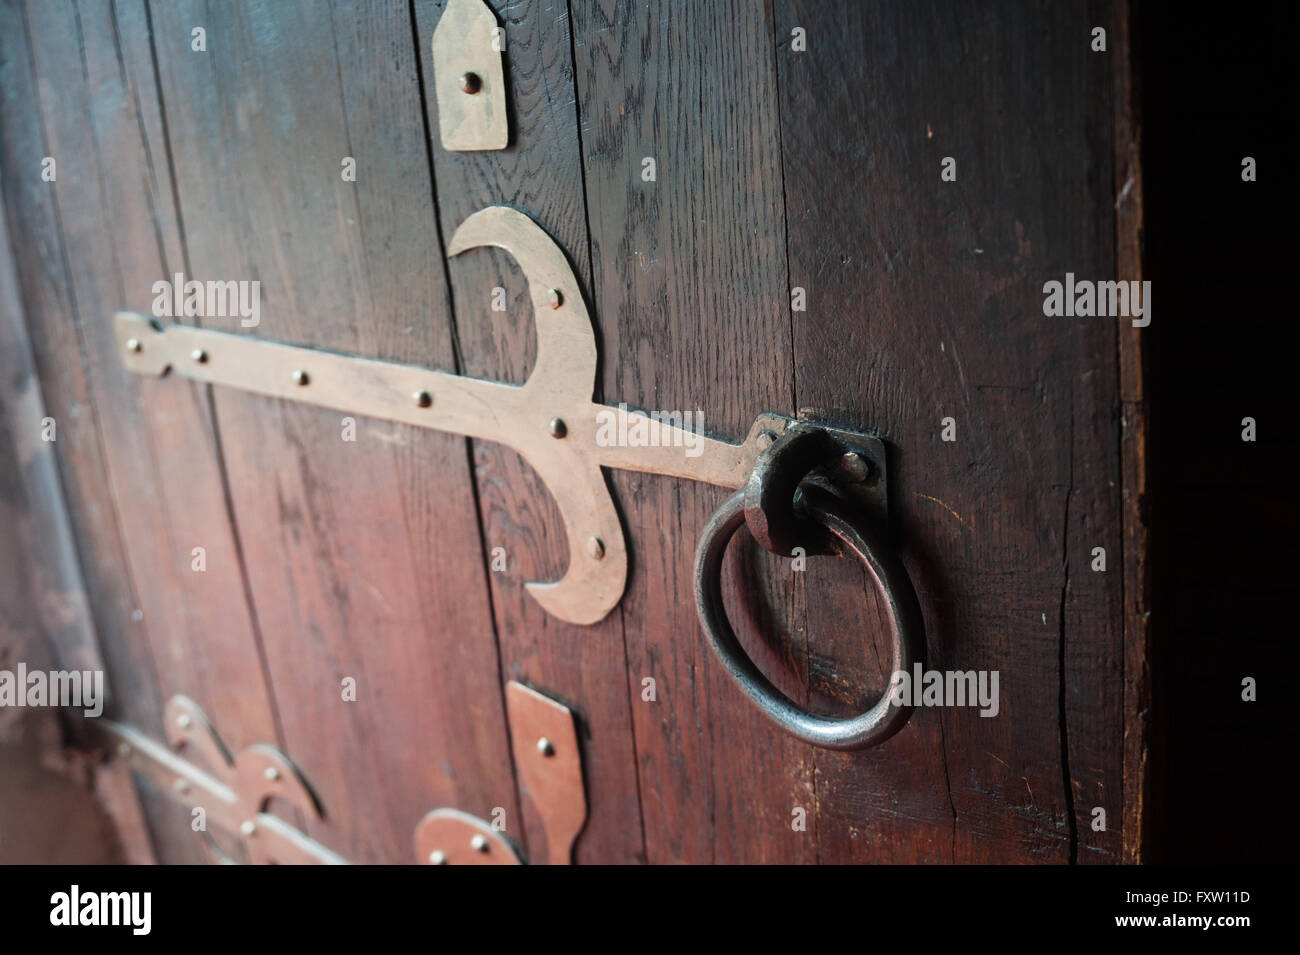 close up old wooden door with metal loops Stock Photo